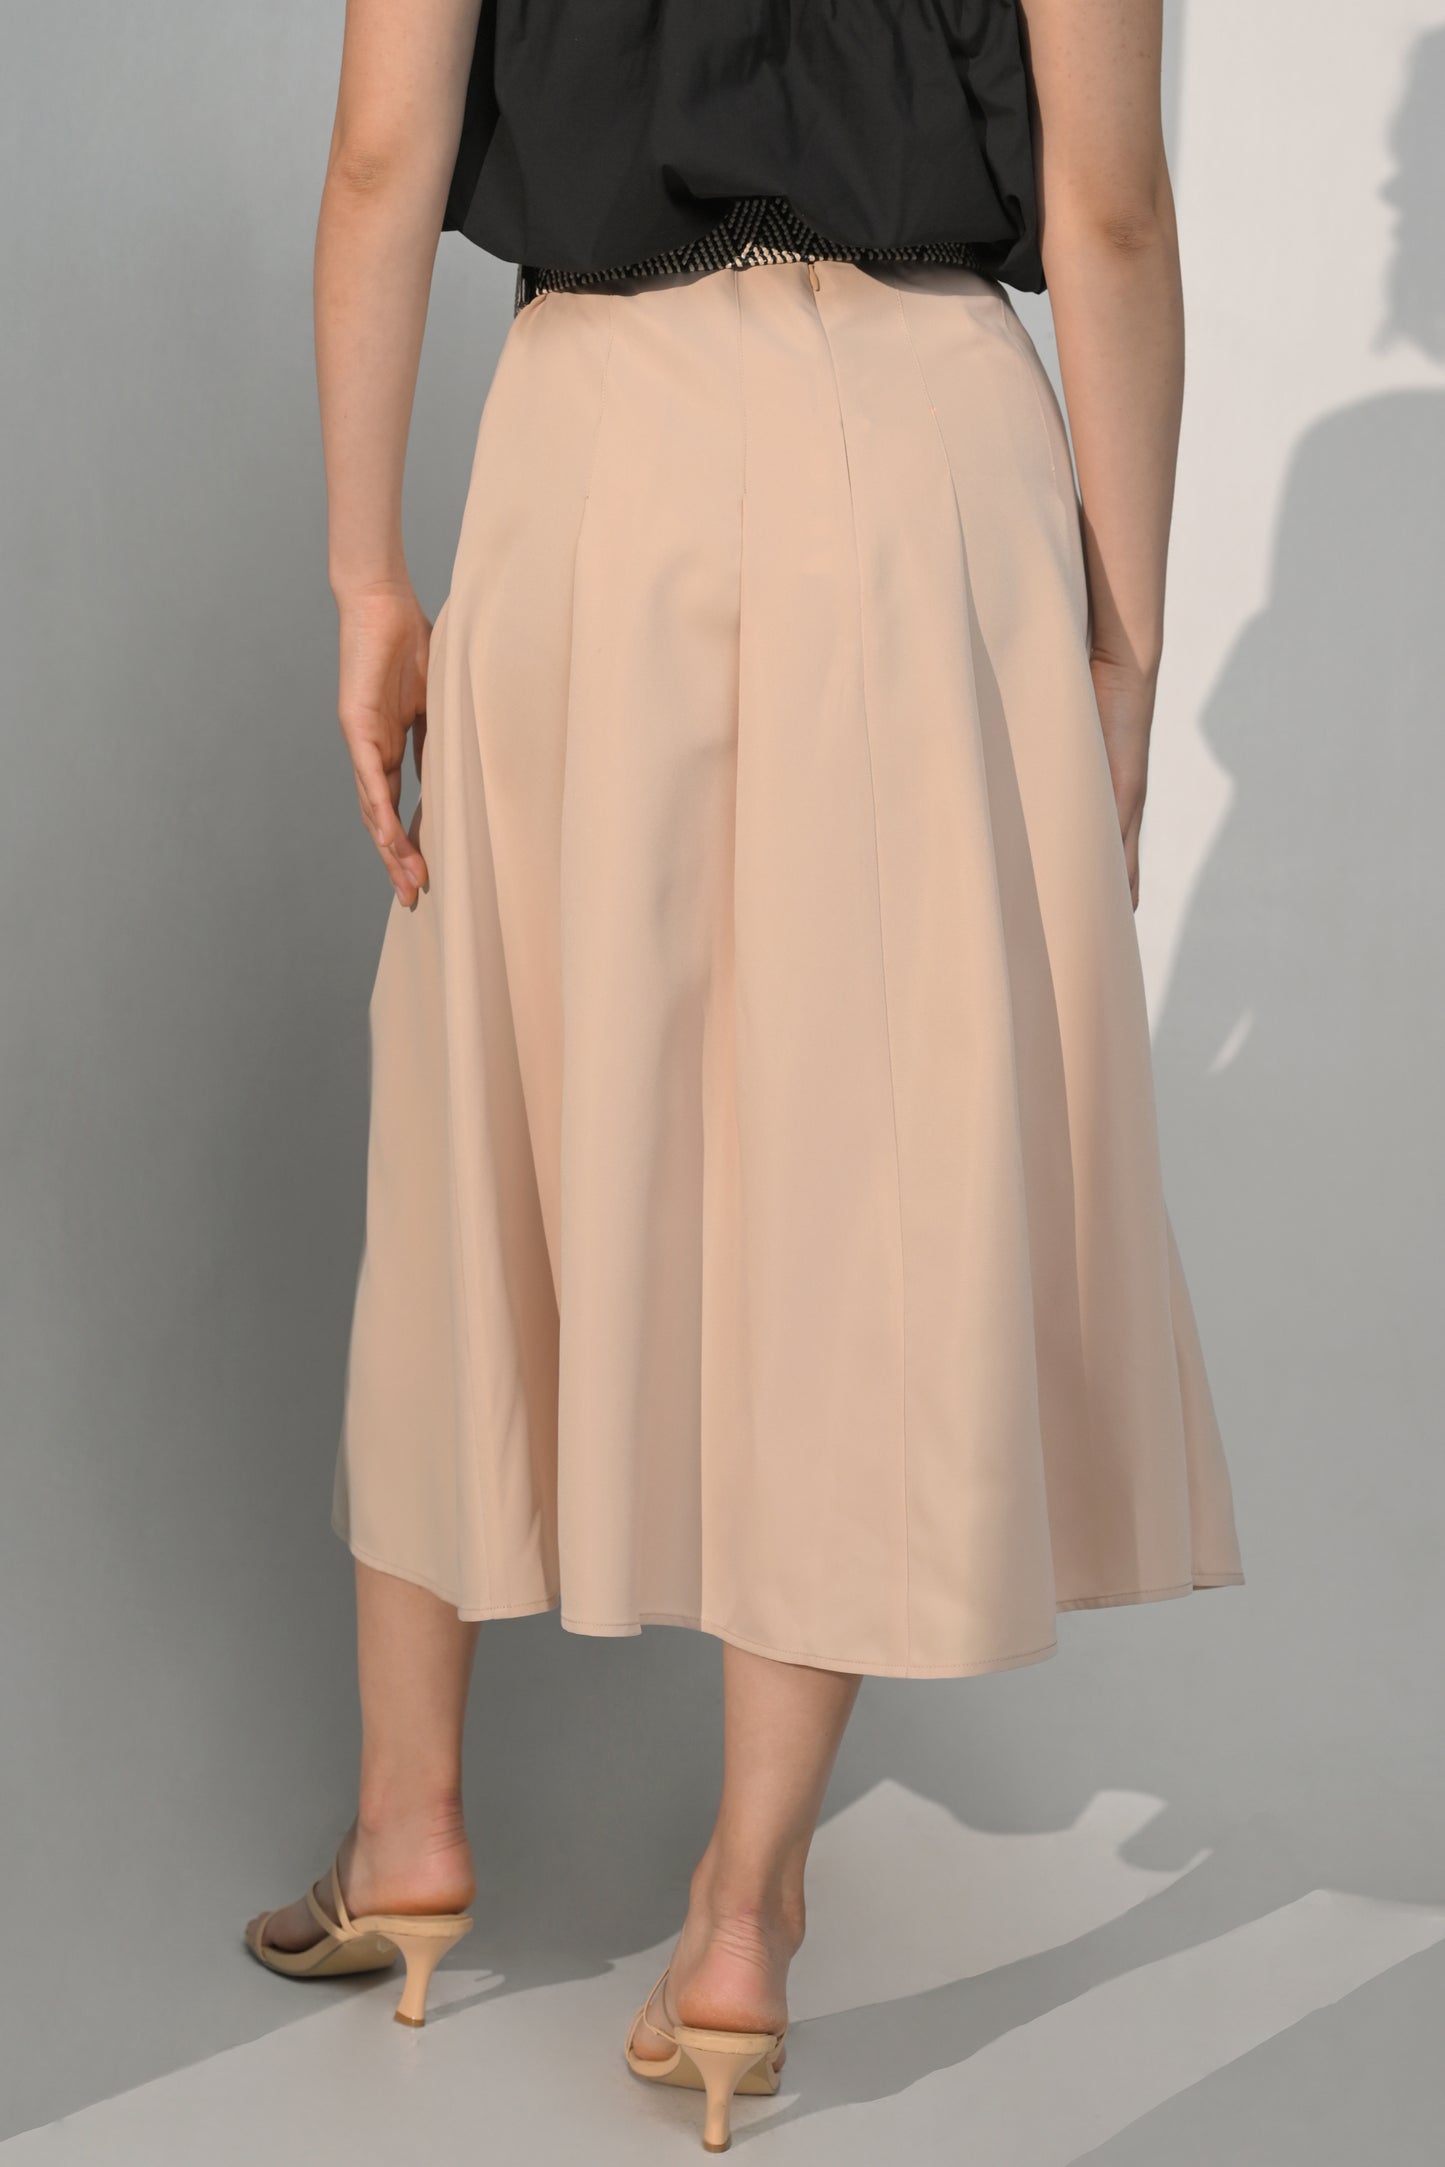 Camryn Skirt W/ Belt (Multi)